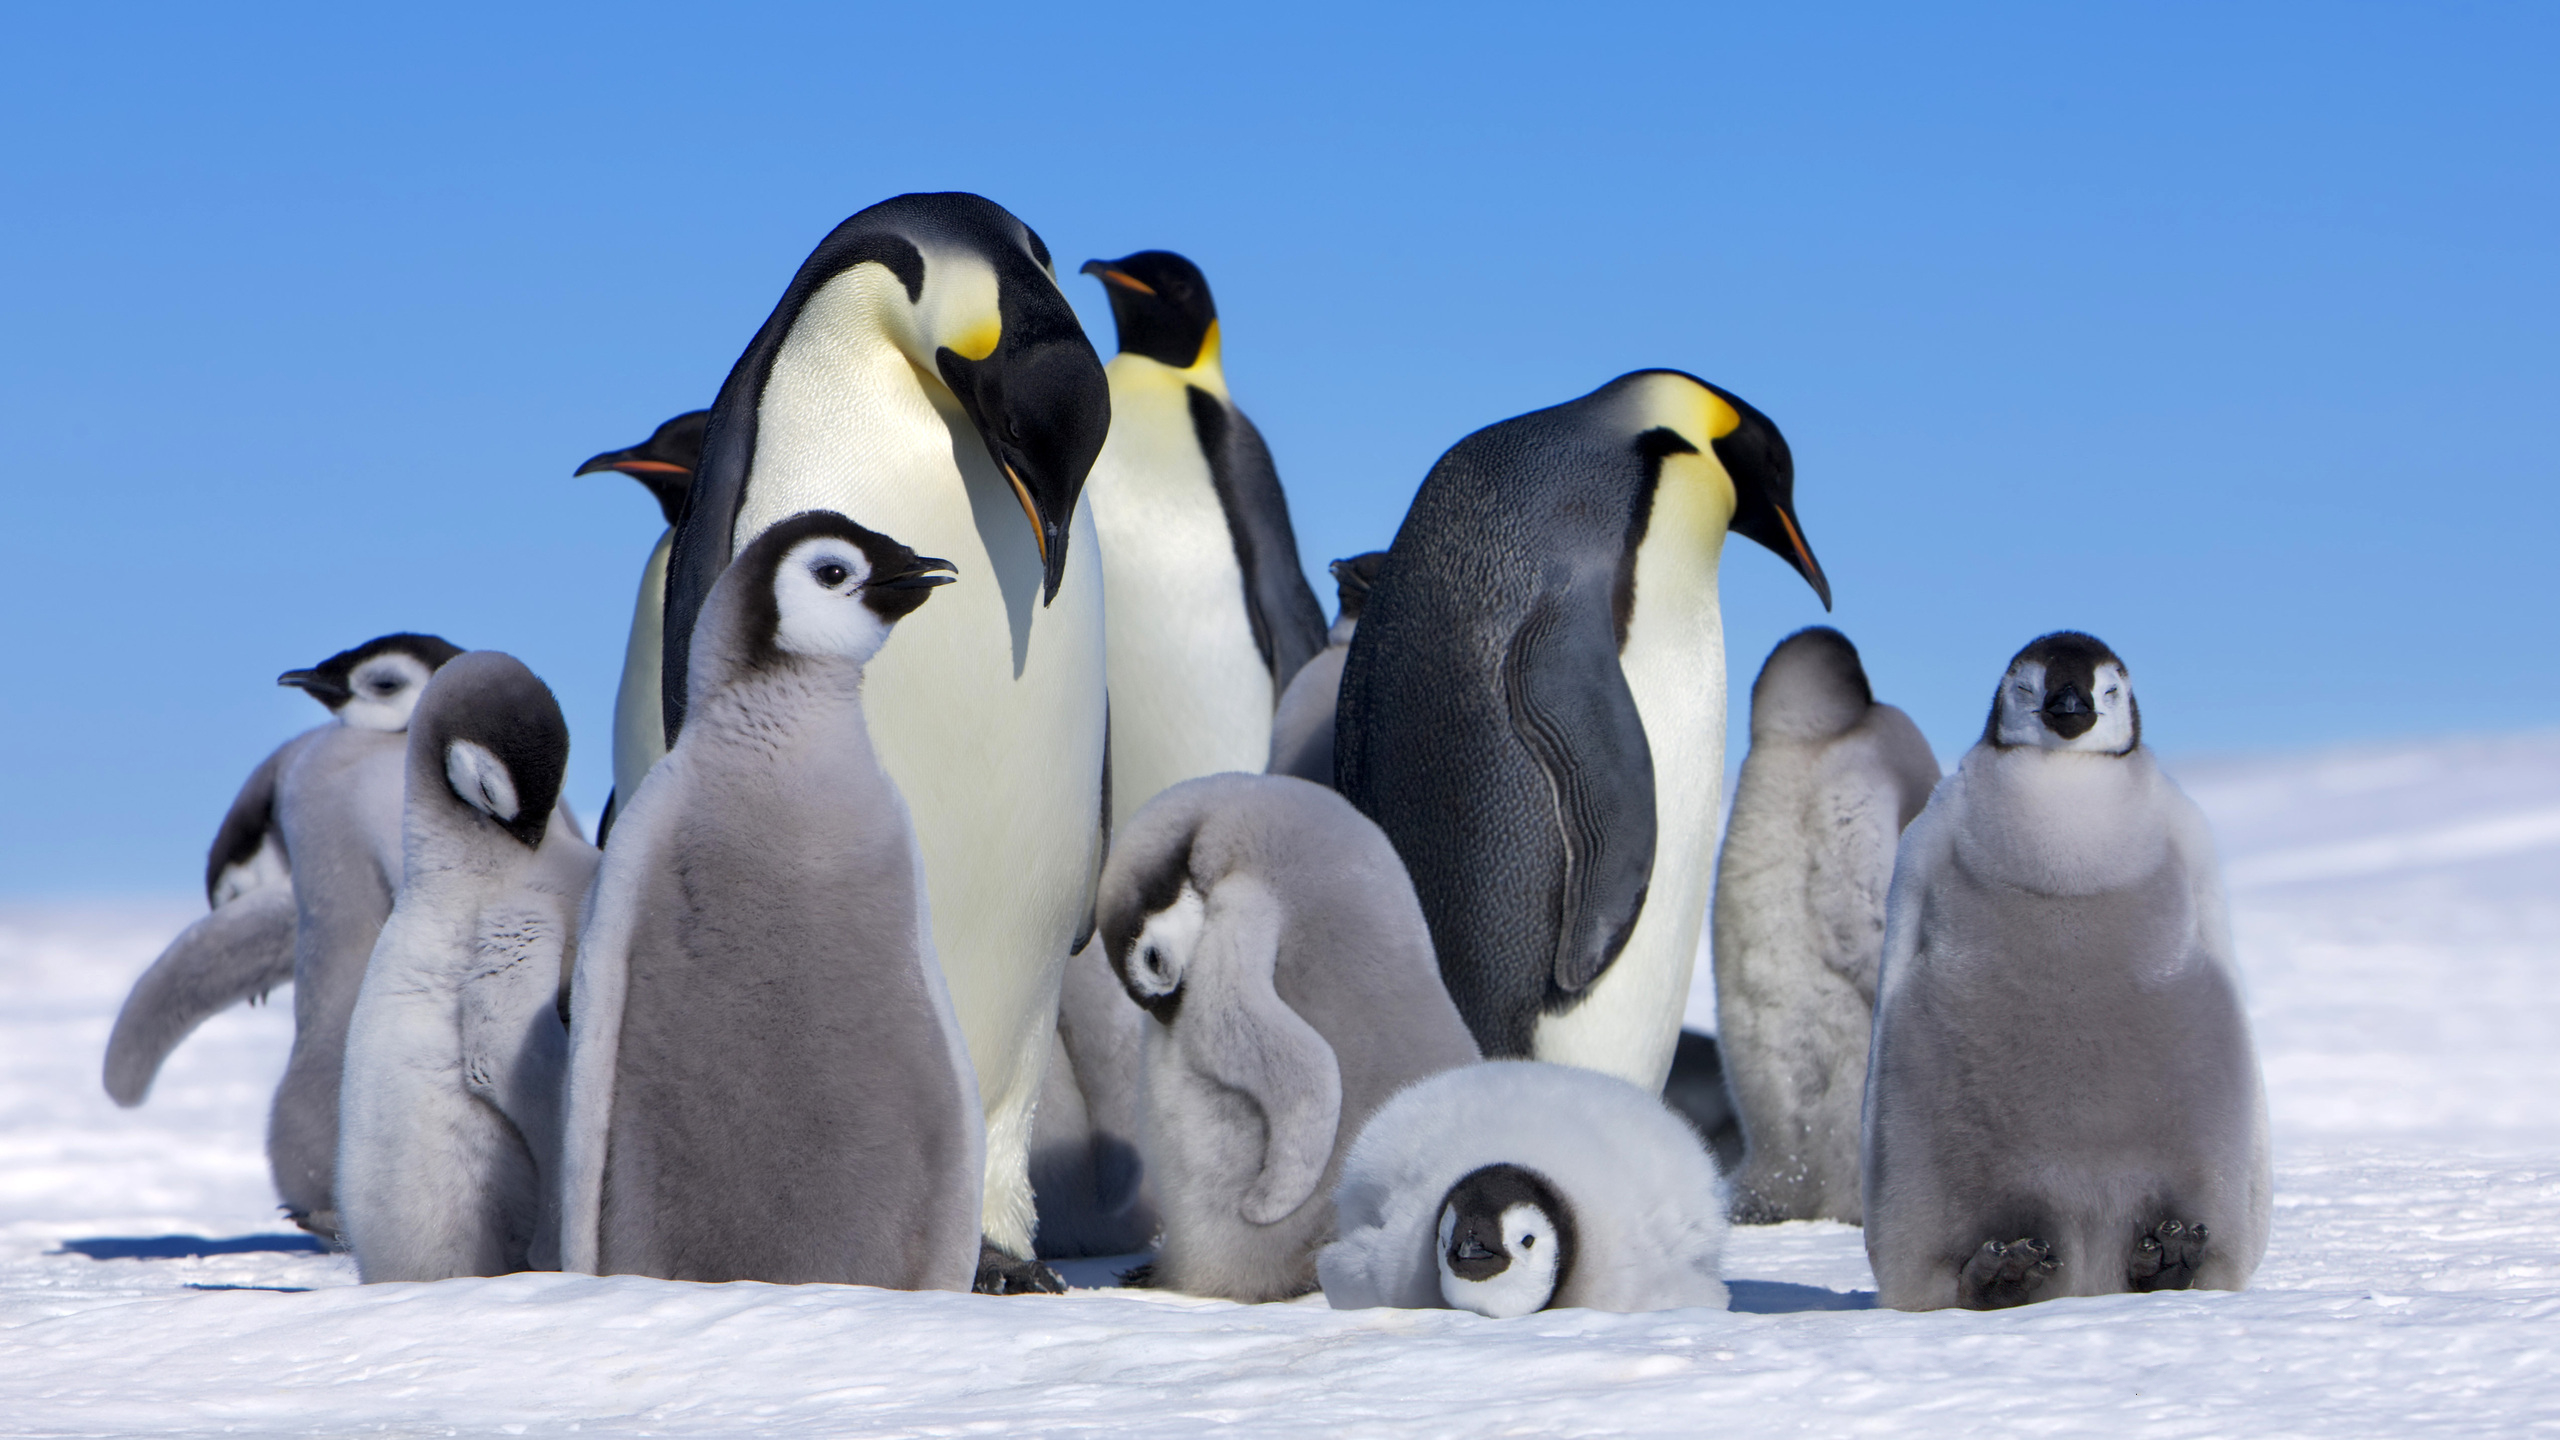 390967 descargar imagen animales, pingüino, ave, polluelo, pingüino emperador, aves: fondos de pantalla y protectores de pantalla gratis